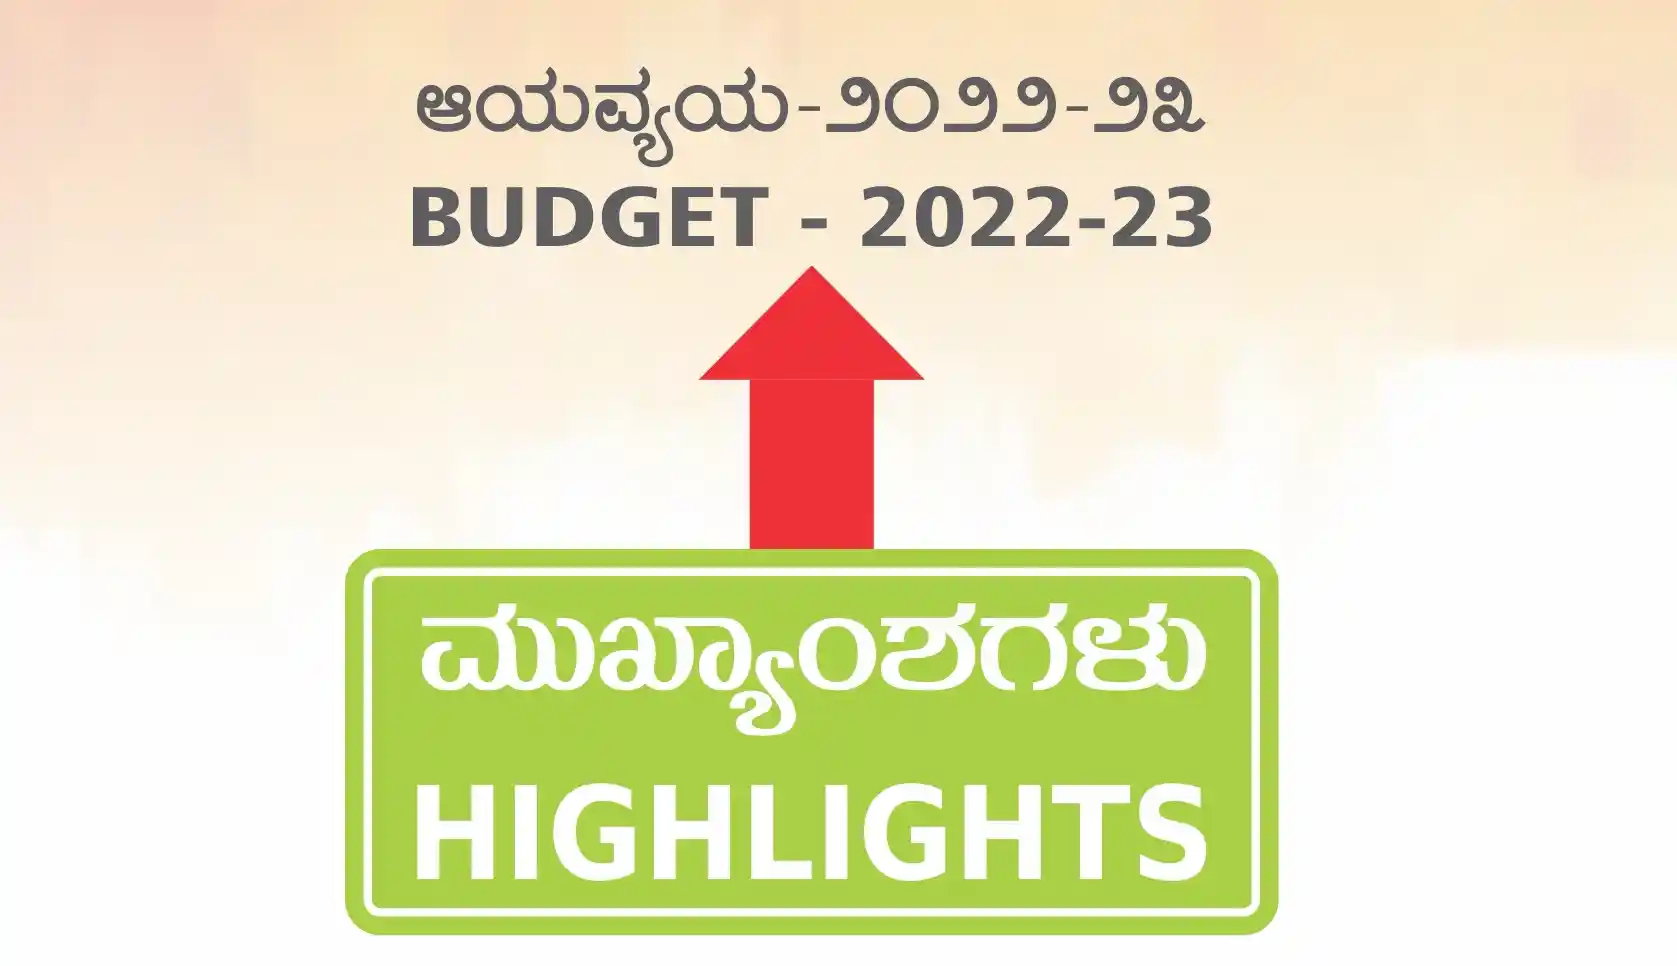 Karnataka Budget 2022-23 PDF in Kannada